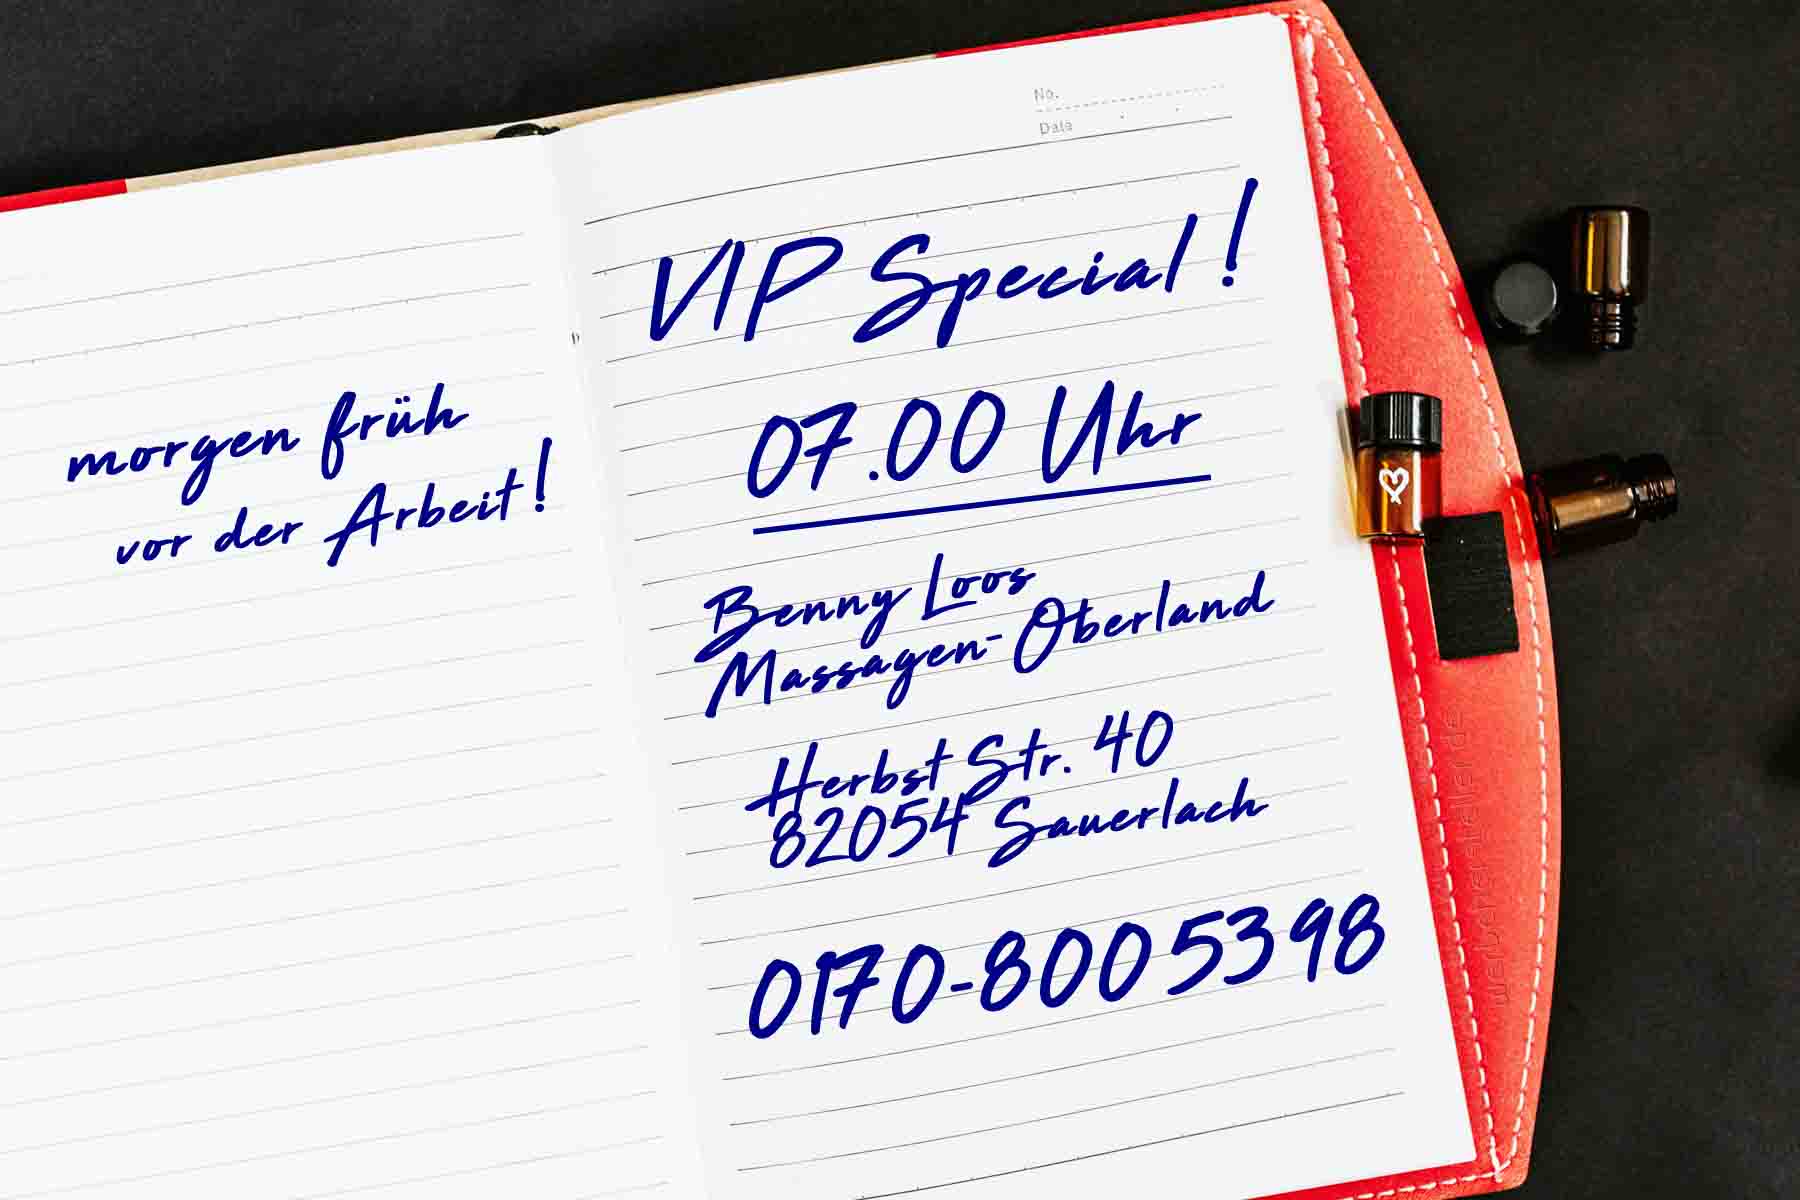 VIP Special Massagen-Oberland - powered by Werbehersteller.de